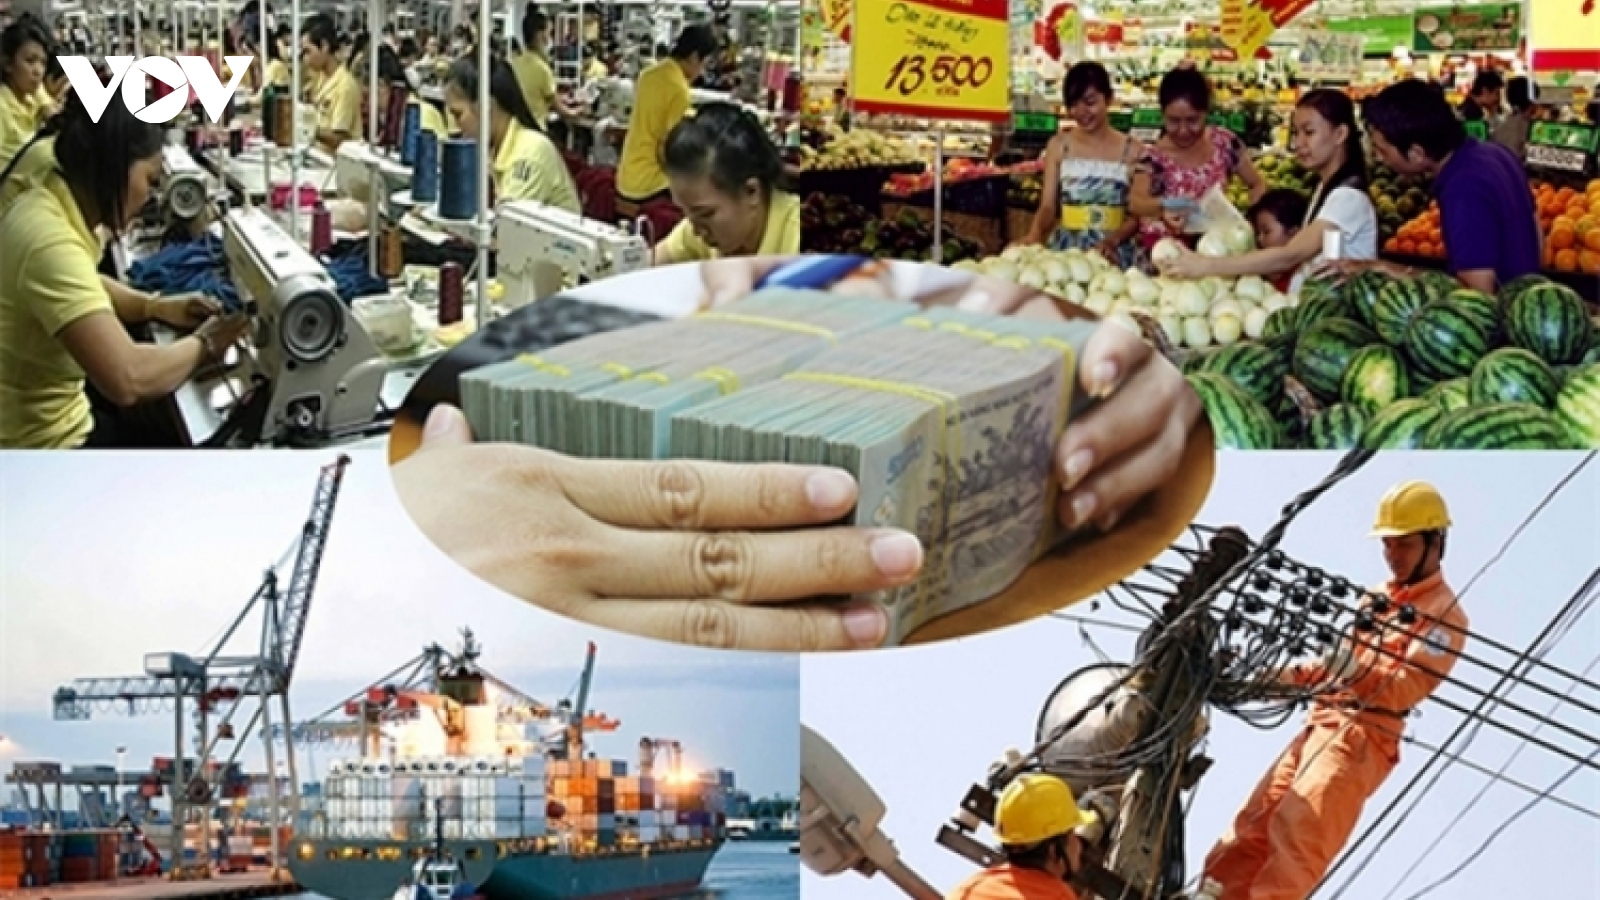 Malaysia News Agency highlights Vietnam’s economic recovery efforts despite COVID-19